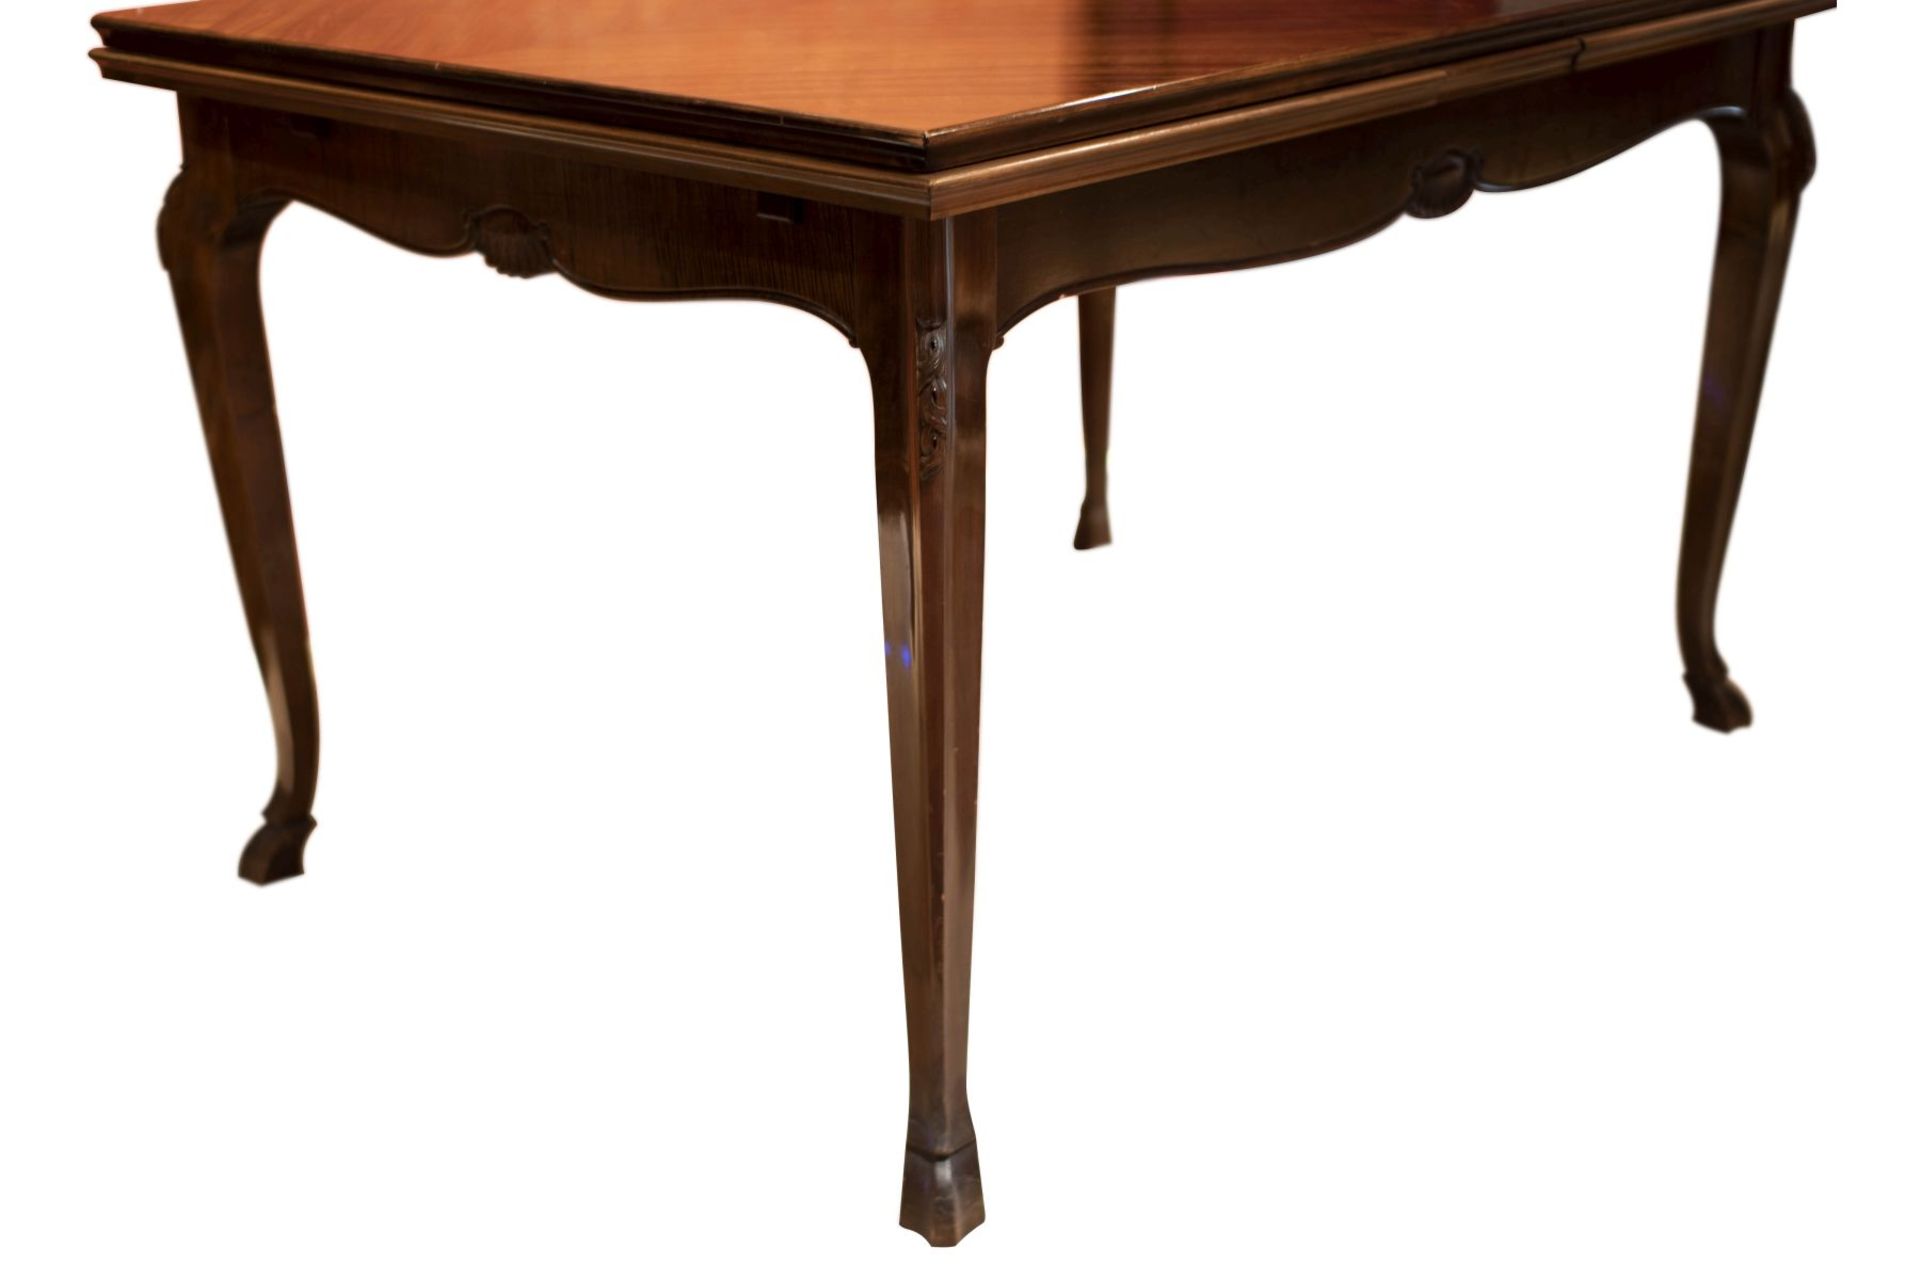 Dining Table with Extendable Top | Esstisch mit ausziehbarer Platte - Image 3 of 3